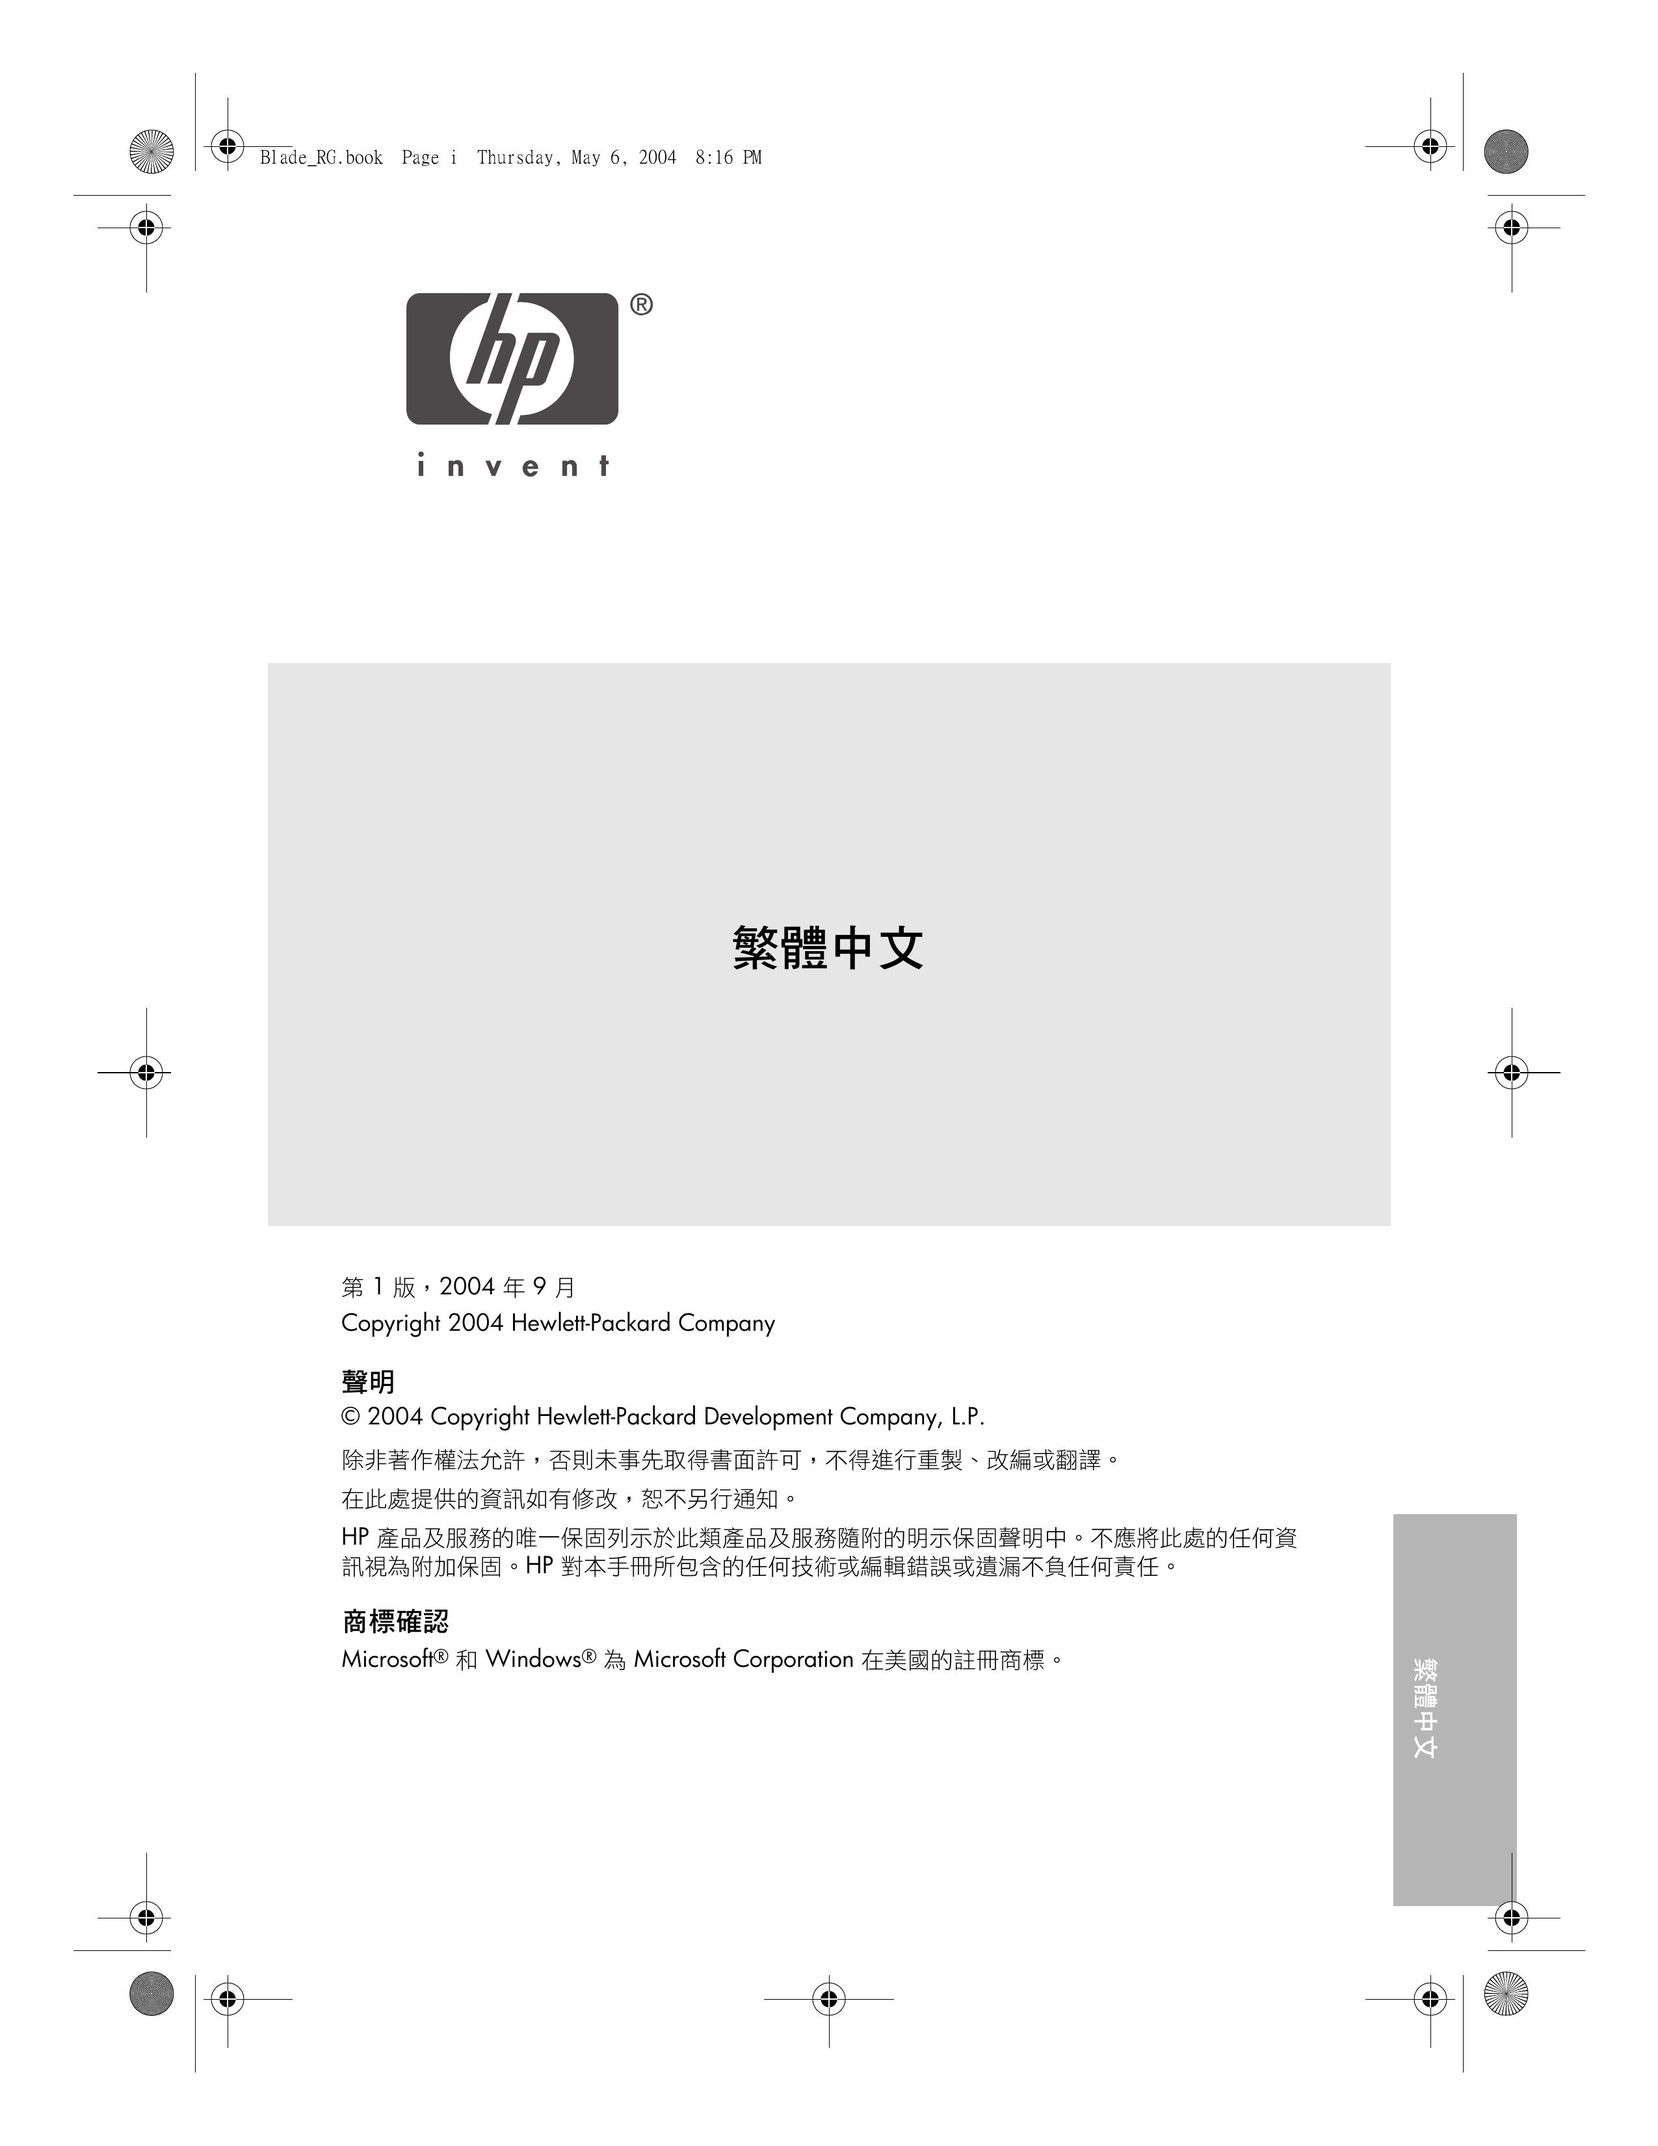 HP (Hewlett-Packard) 3740 Series Telephone User Manual